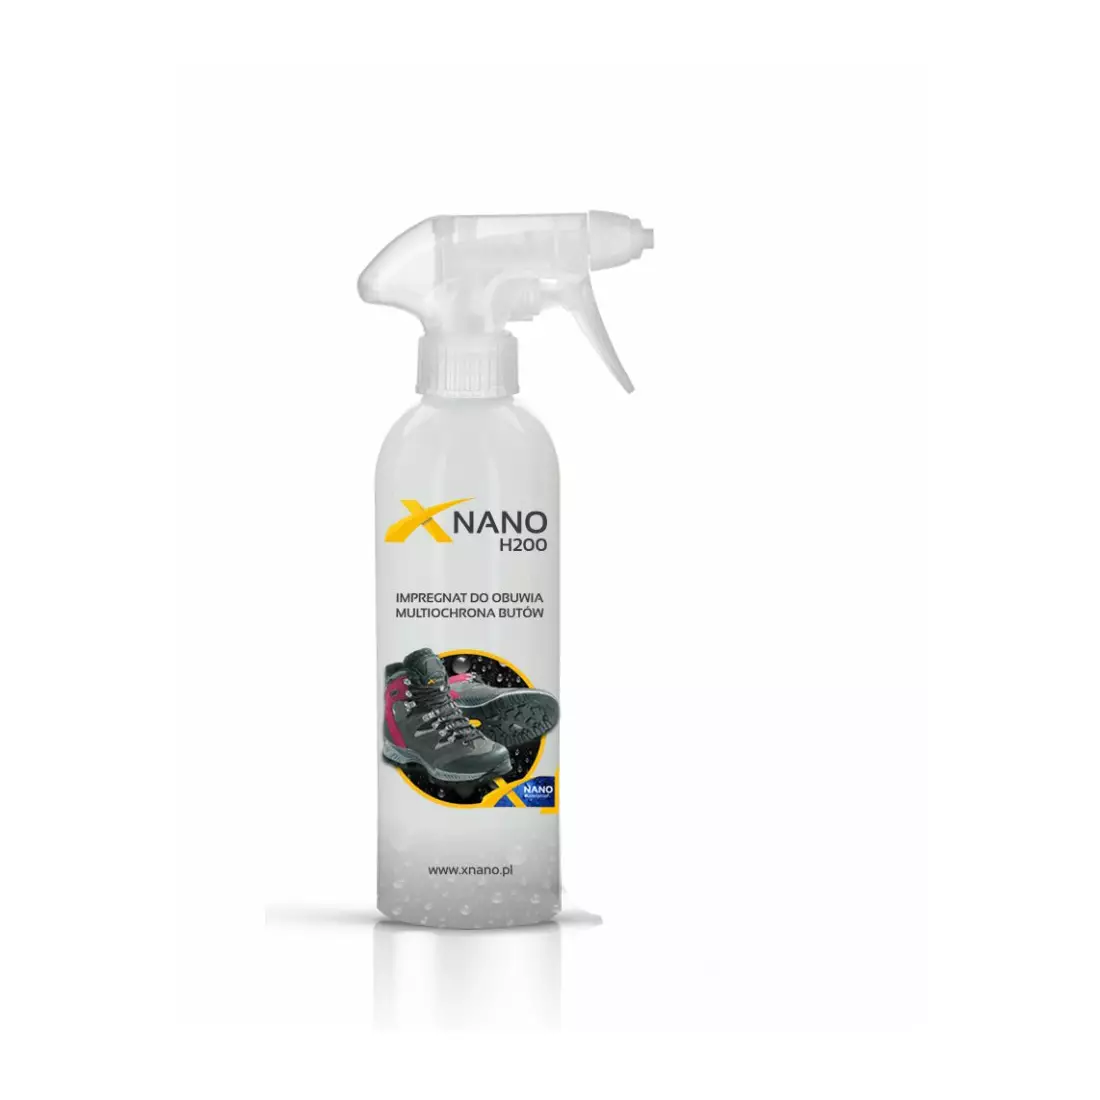 NANOBIZ - XNANO - H200 Impregnare multiprotectoare pentru pantofi, capacitate: 250 ml